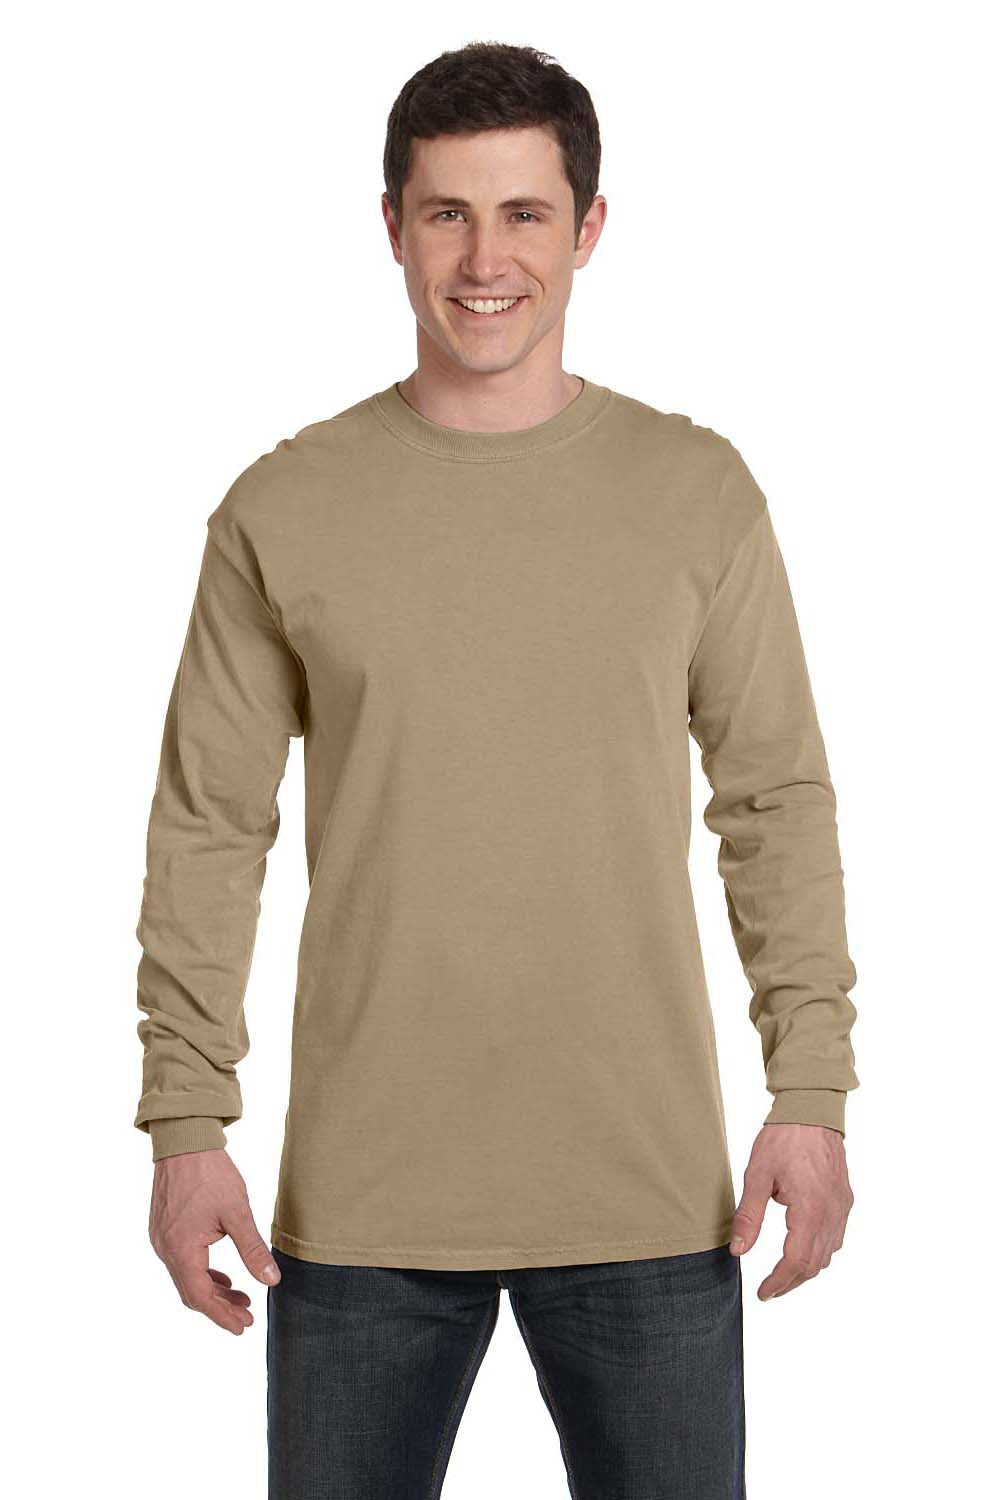 Comfort Colors C6014 Mens Long Sleeve Crewneck T-Shirt Khaki Brown Front